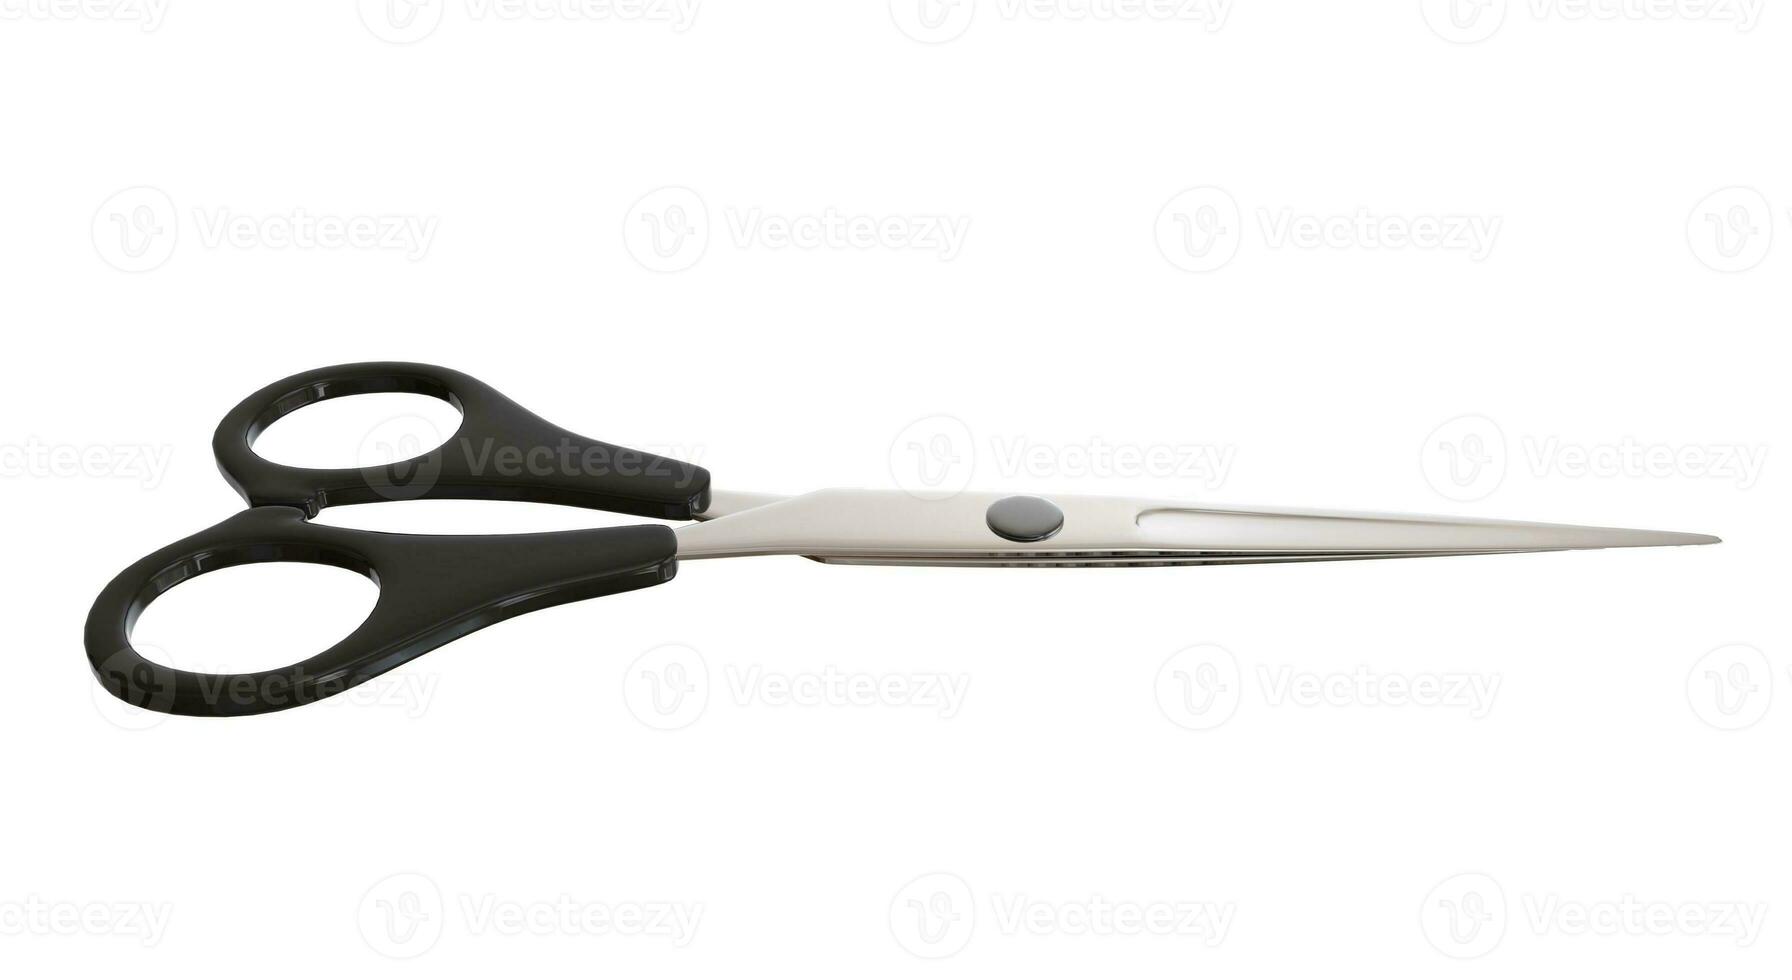 Scissors with black grip - closed photo